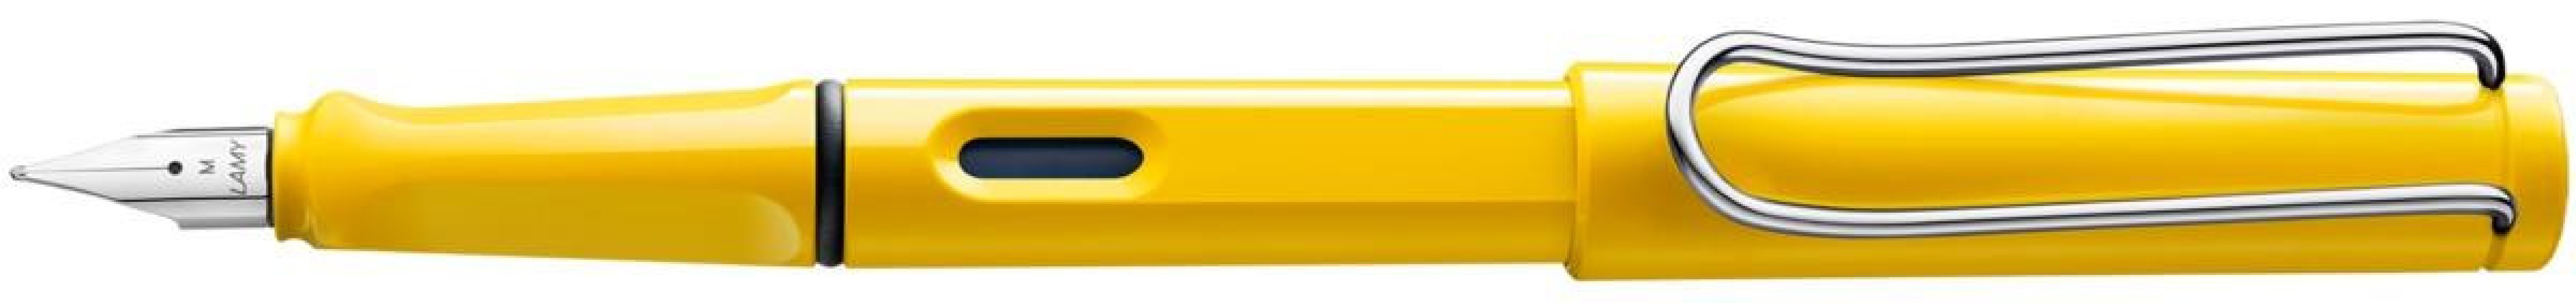 LAMY safari shiny yellow pen 018